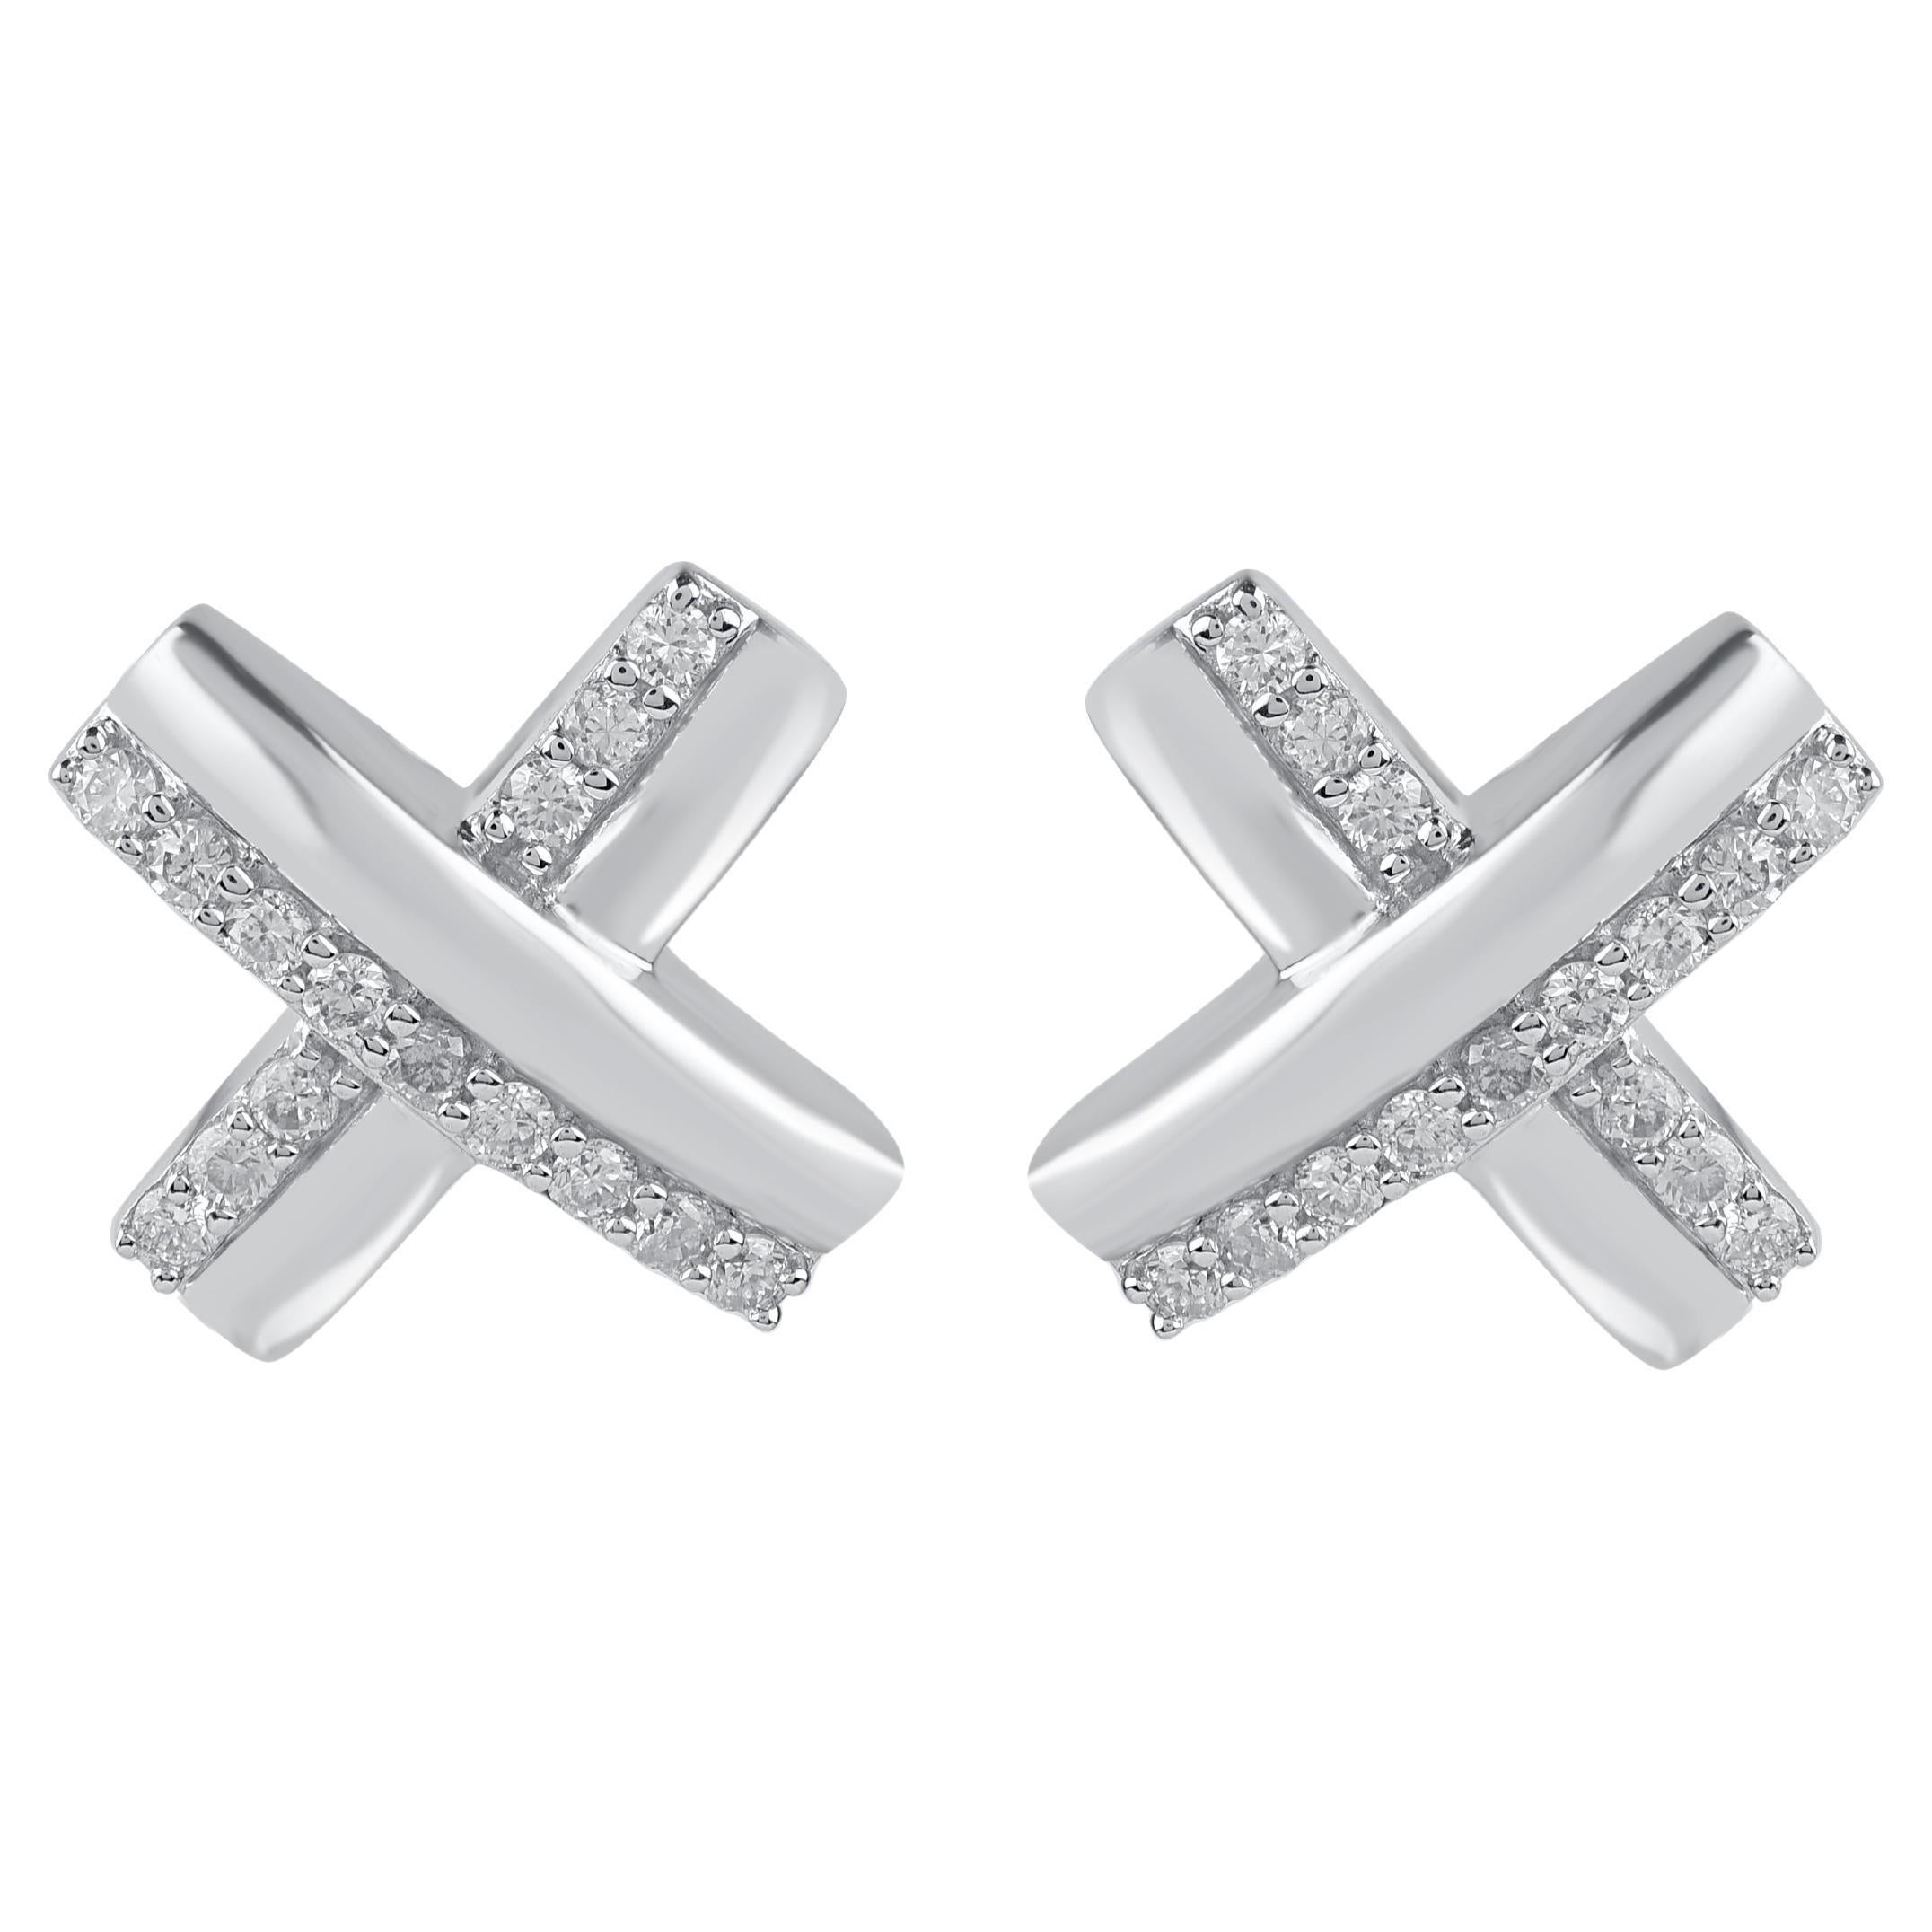 TJD 0.20 Carat Brilliant Cut Diamond 14KT White Gold 'X' Shape Stud Earrings